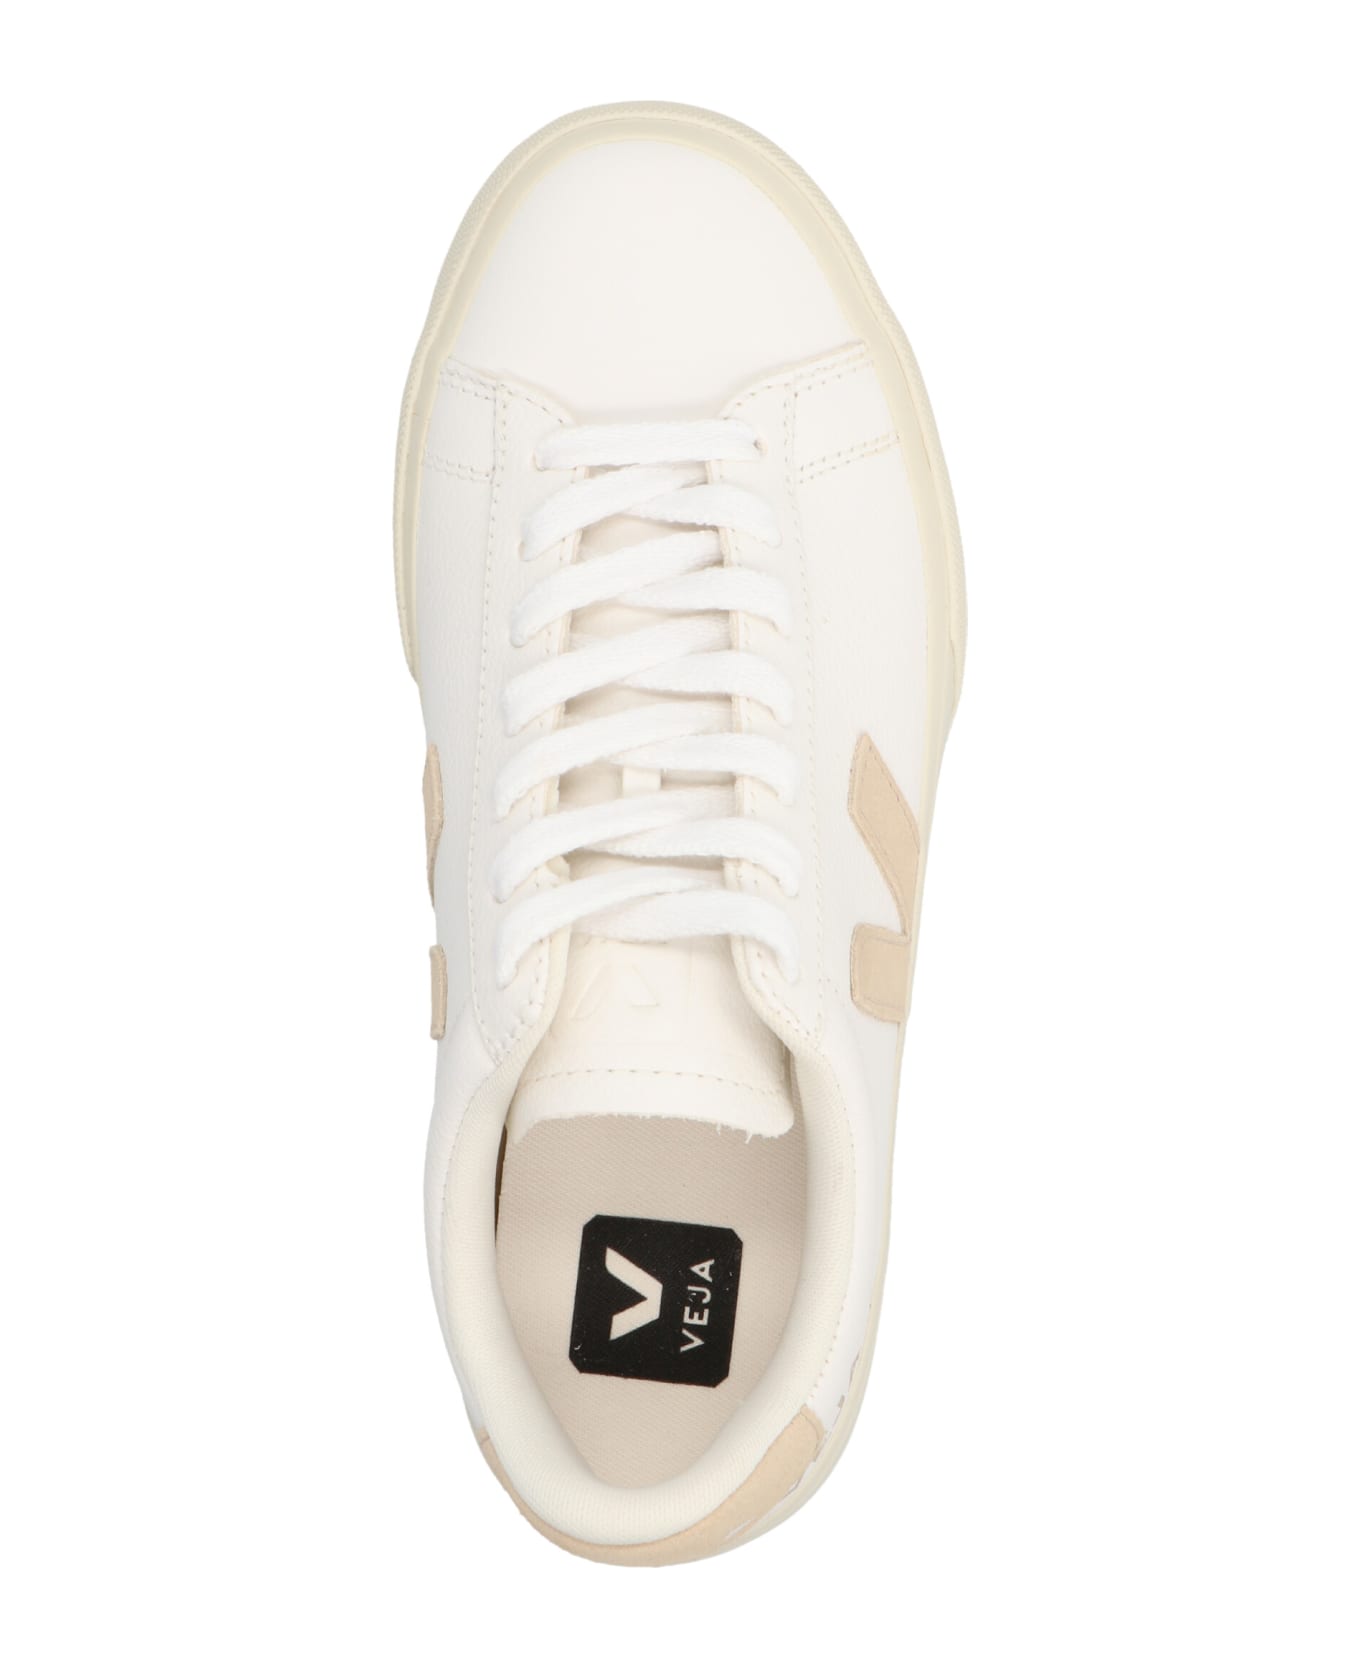 Veja 'campo Sneakers - Extra White/ Almond